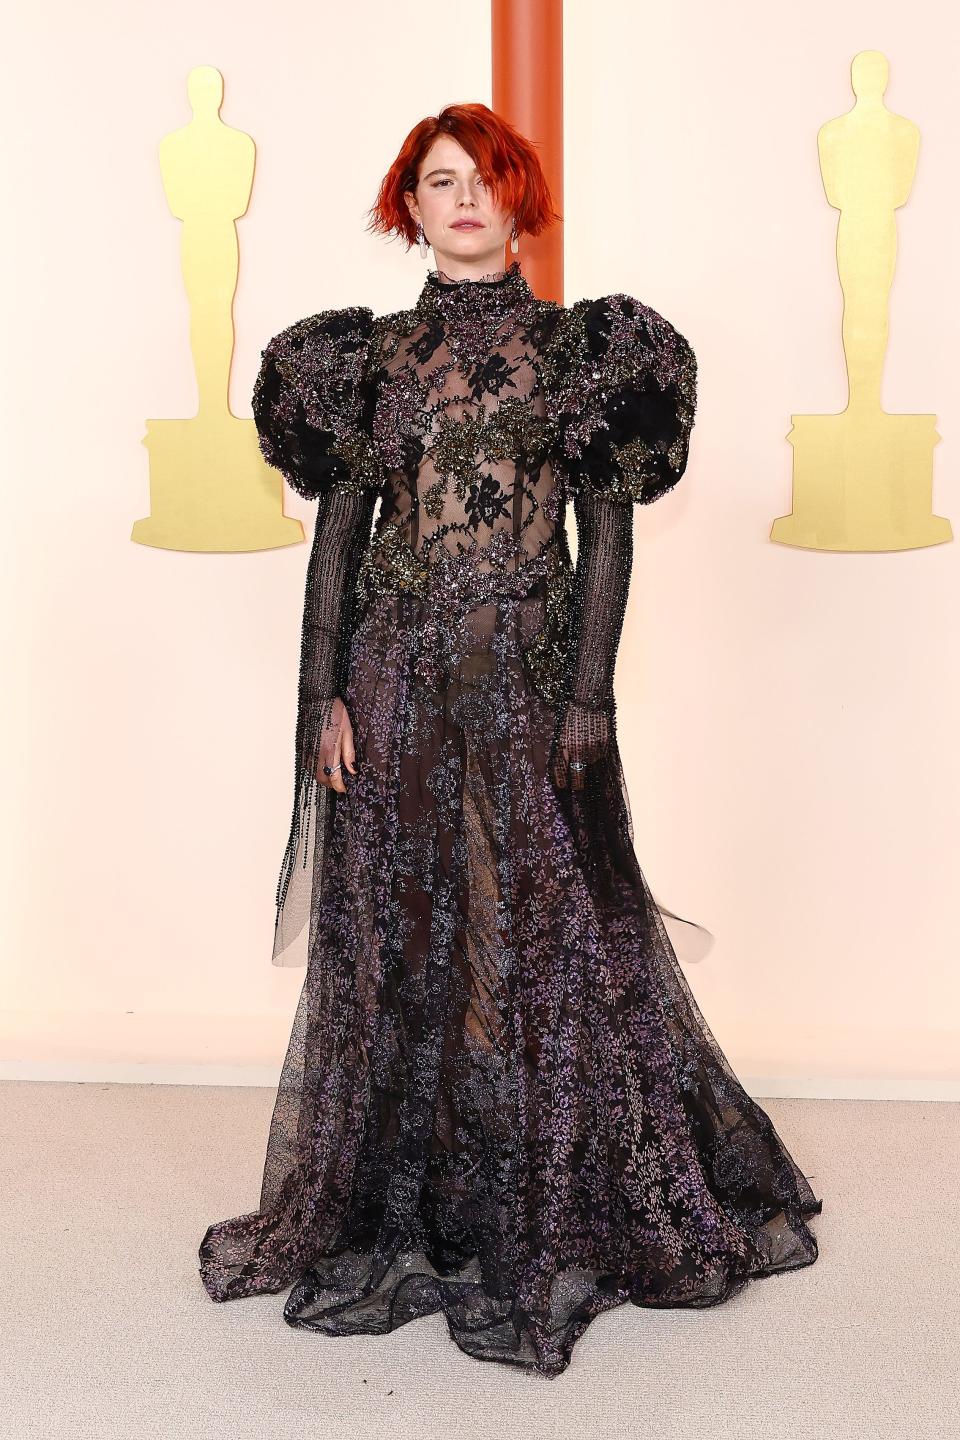 Jessie Buckley attends the 2023 Academy Awards.